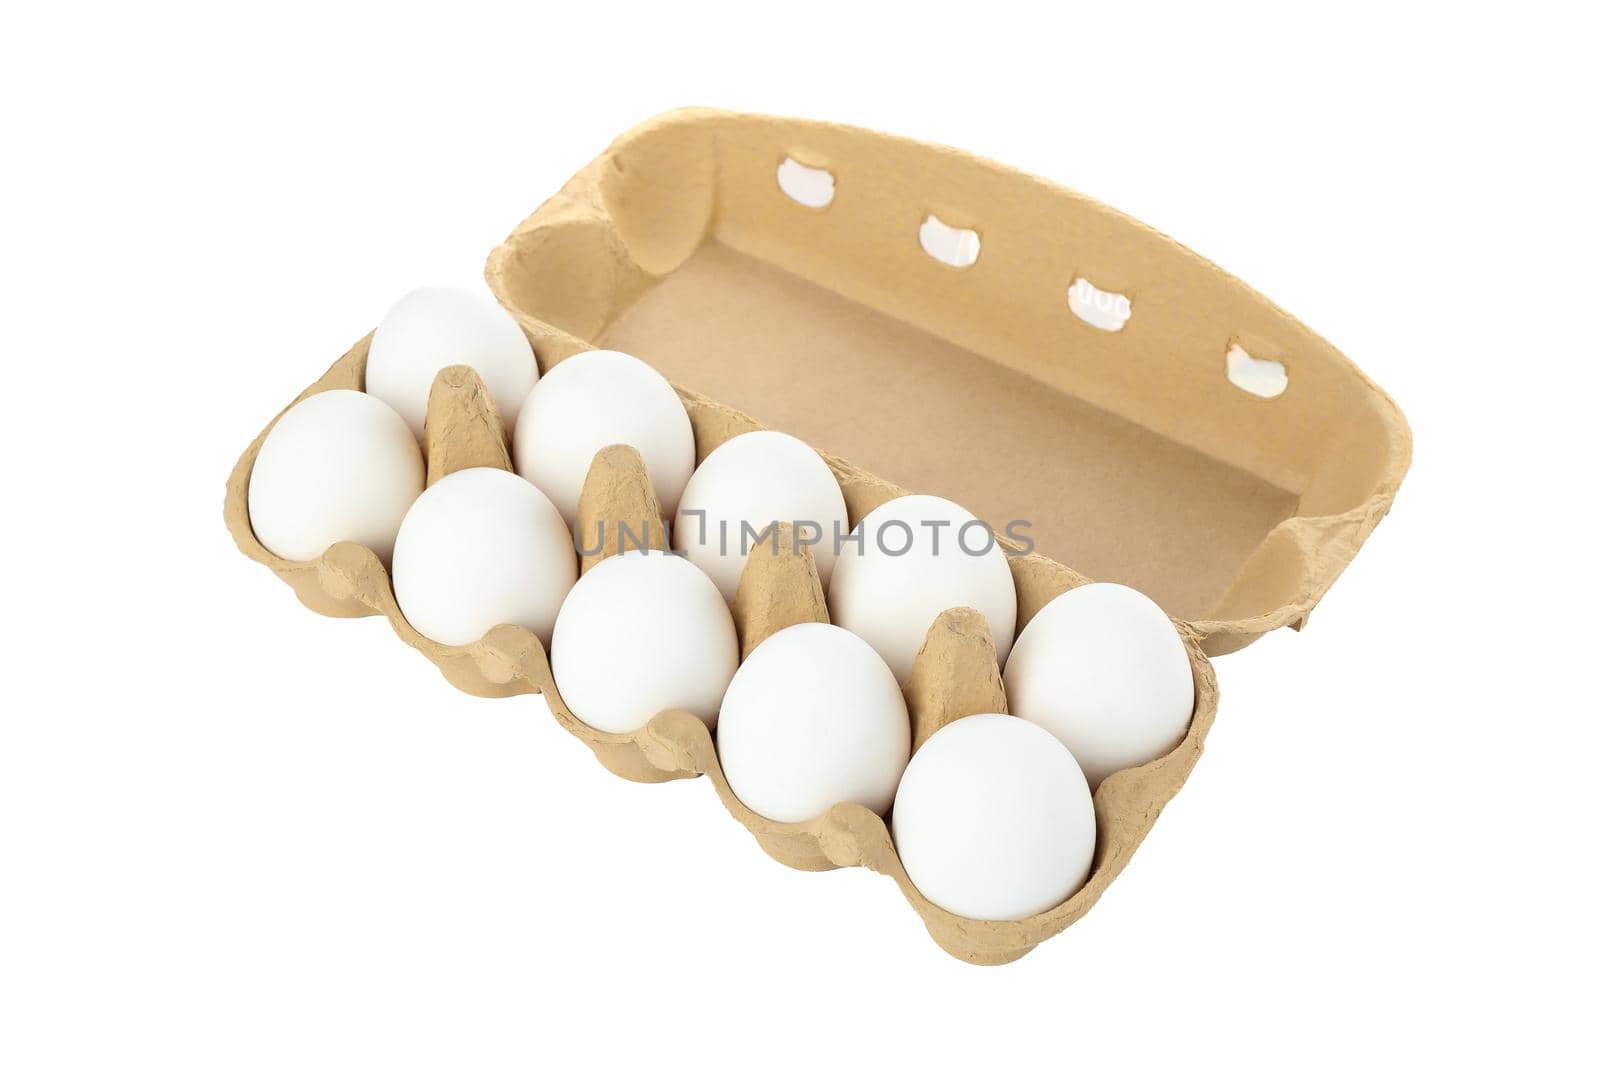 Few raw chicken eggs in carton box on white background